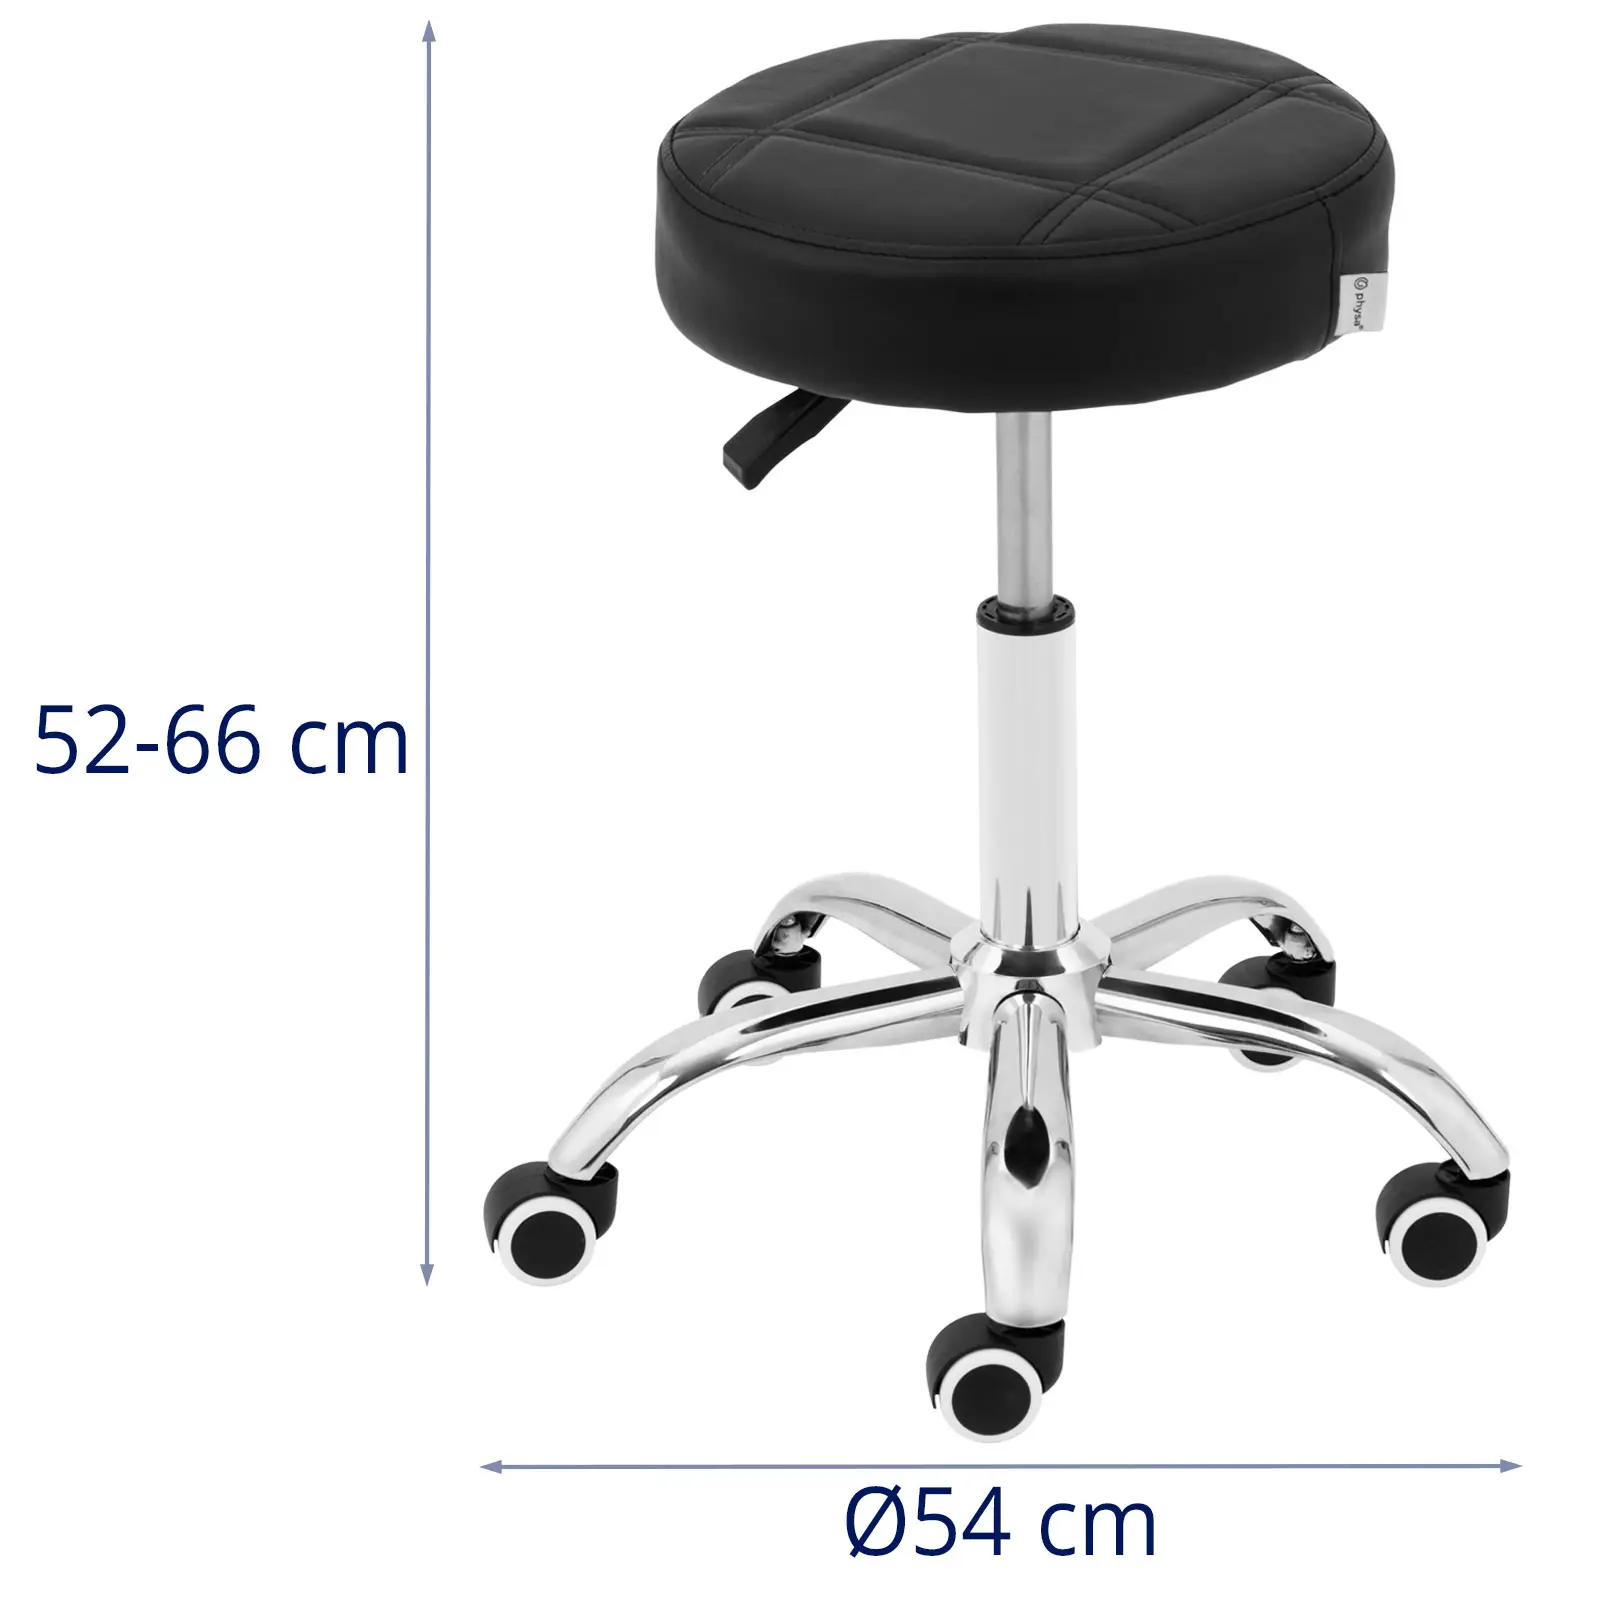 Roler stolček - 52 - 66 cm - 120 kg - črna